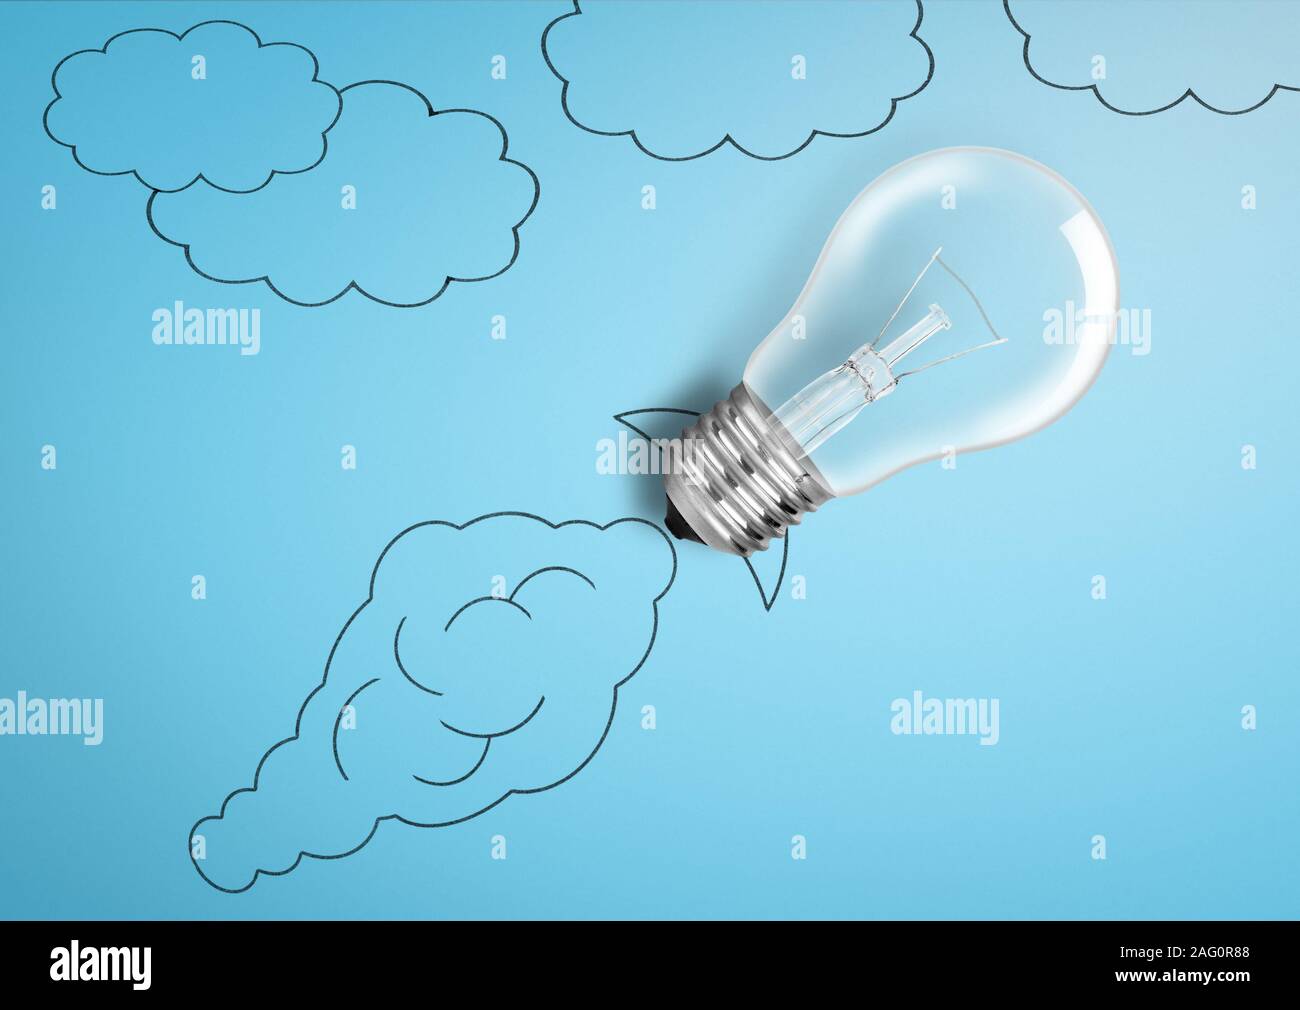 Success idea concept, light bulb rocket startup Stock Photo